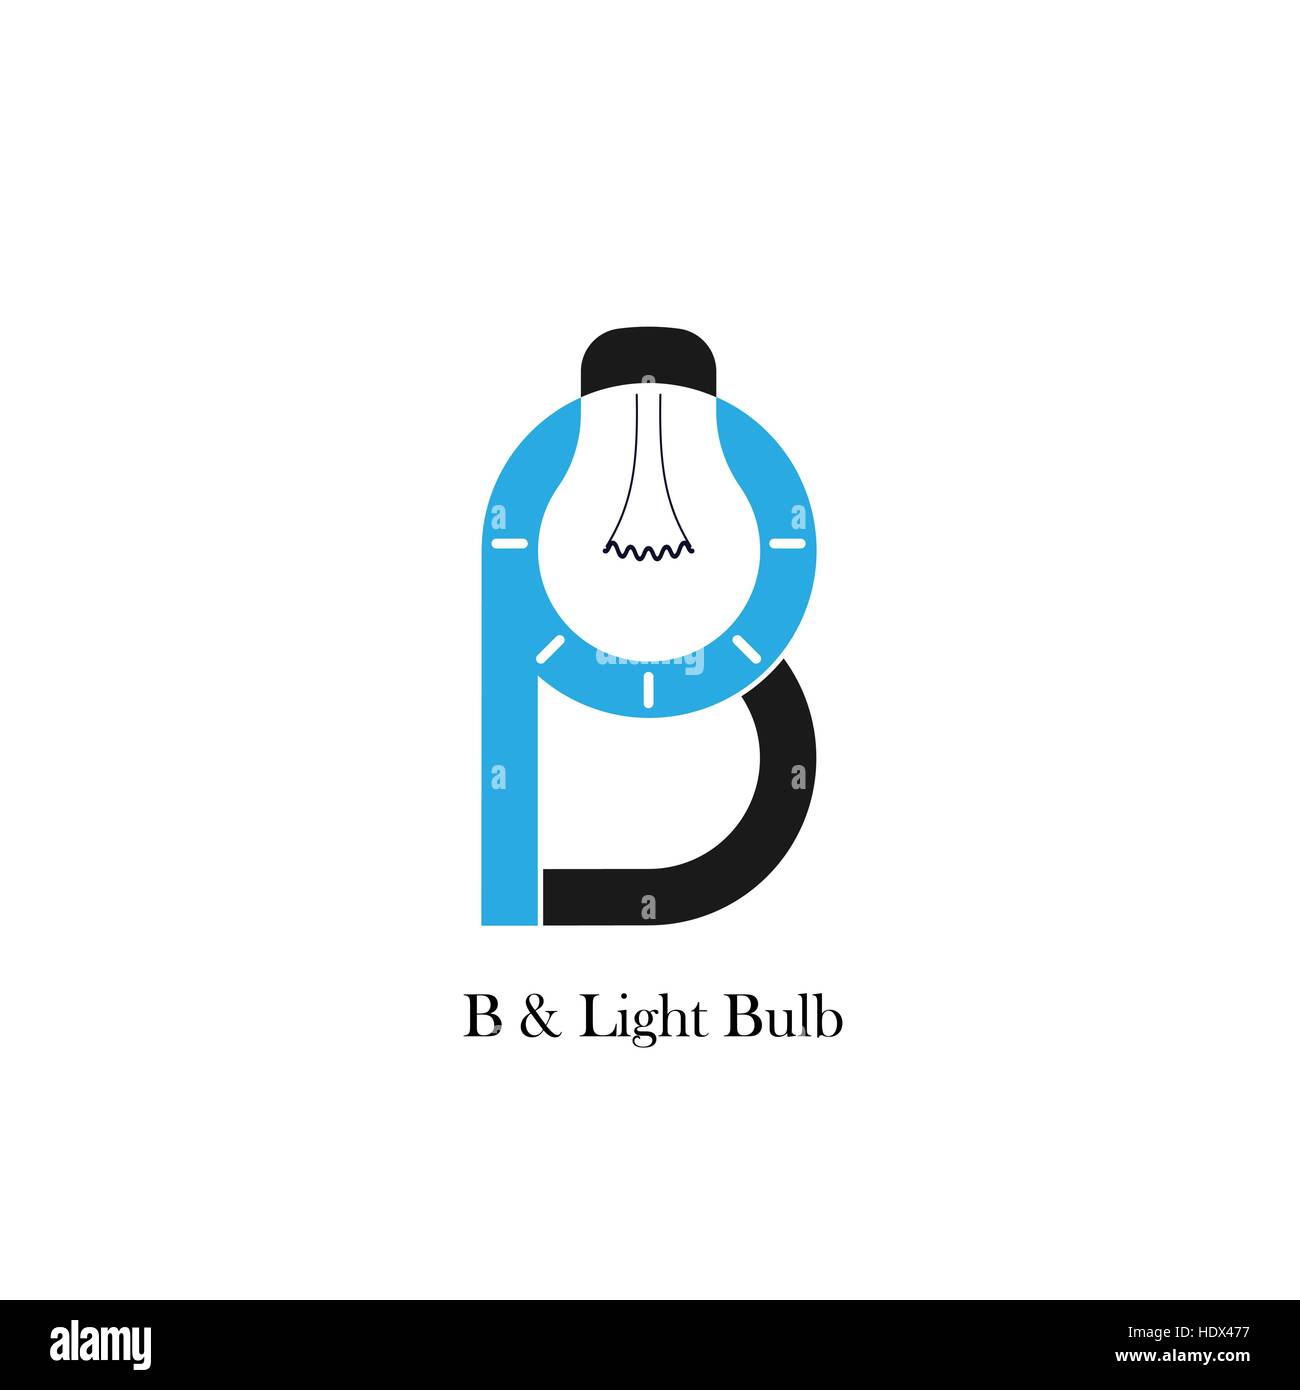 https://c8.alamy.com/comp/HDX477/b-letteralphabet-icon-and-light-bulb-abstract-logo-design-vector-templatecorporate-HDX477.jpg